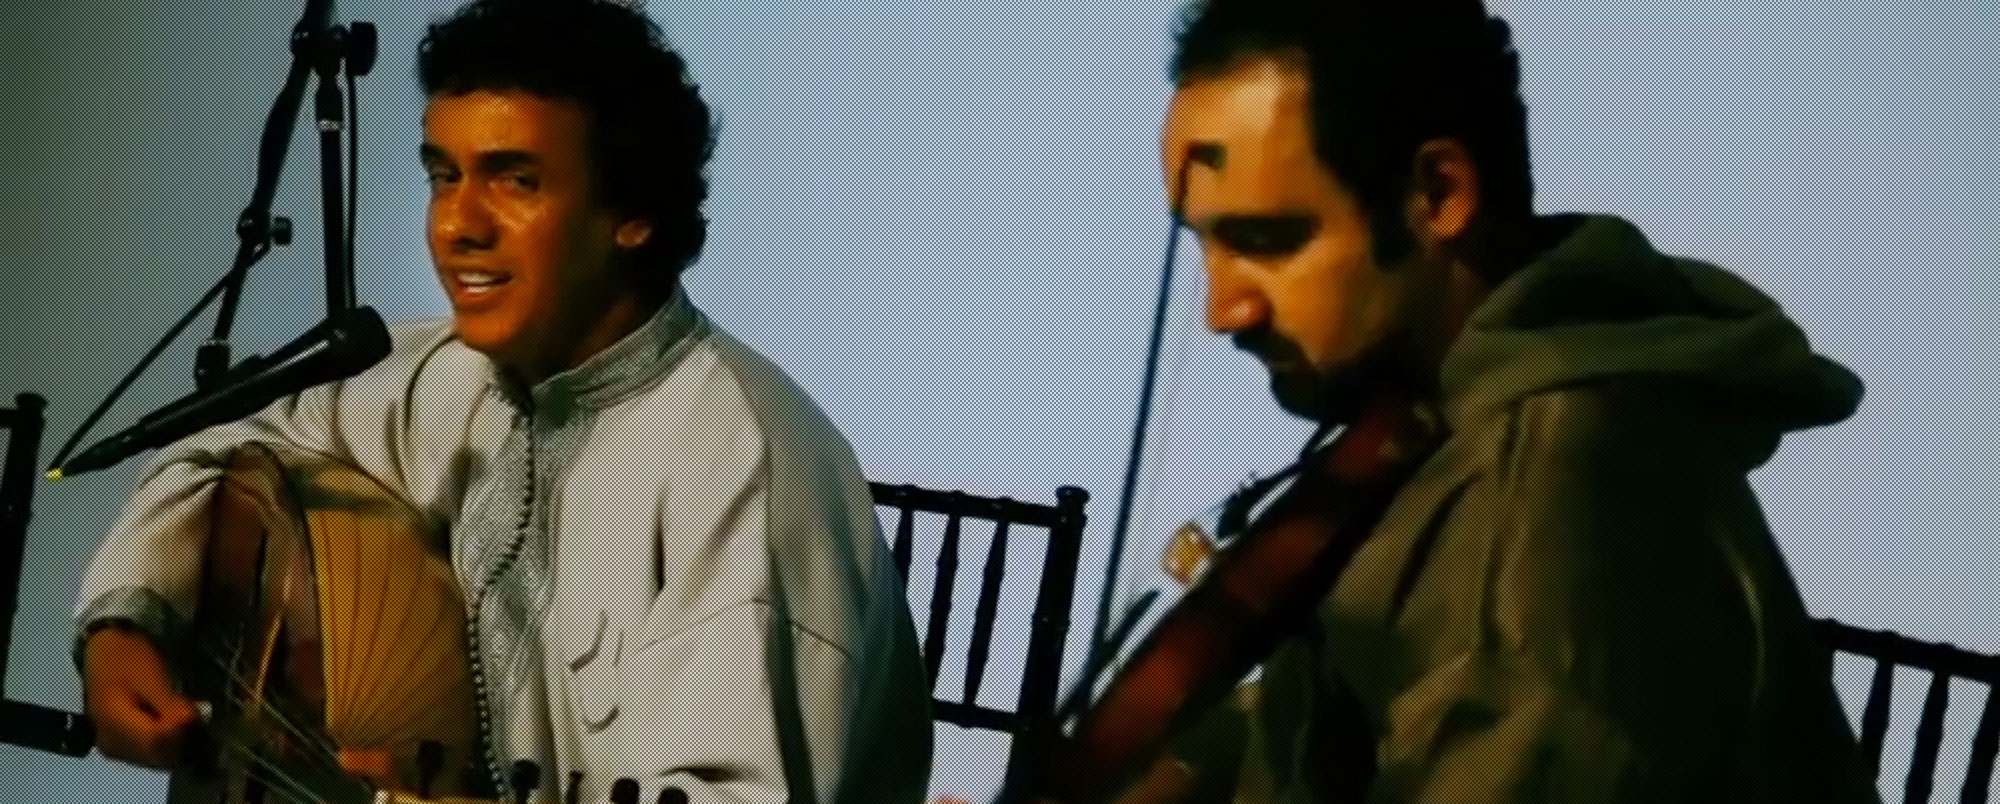 Arabic Musicians